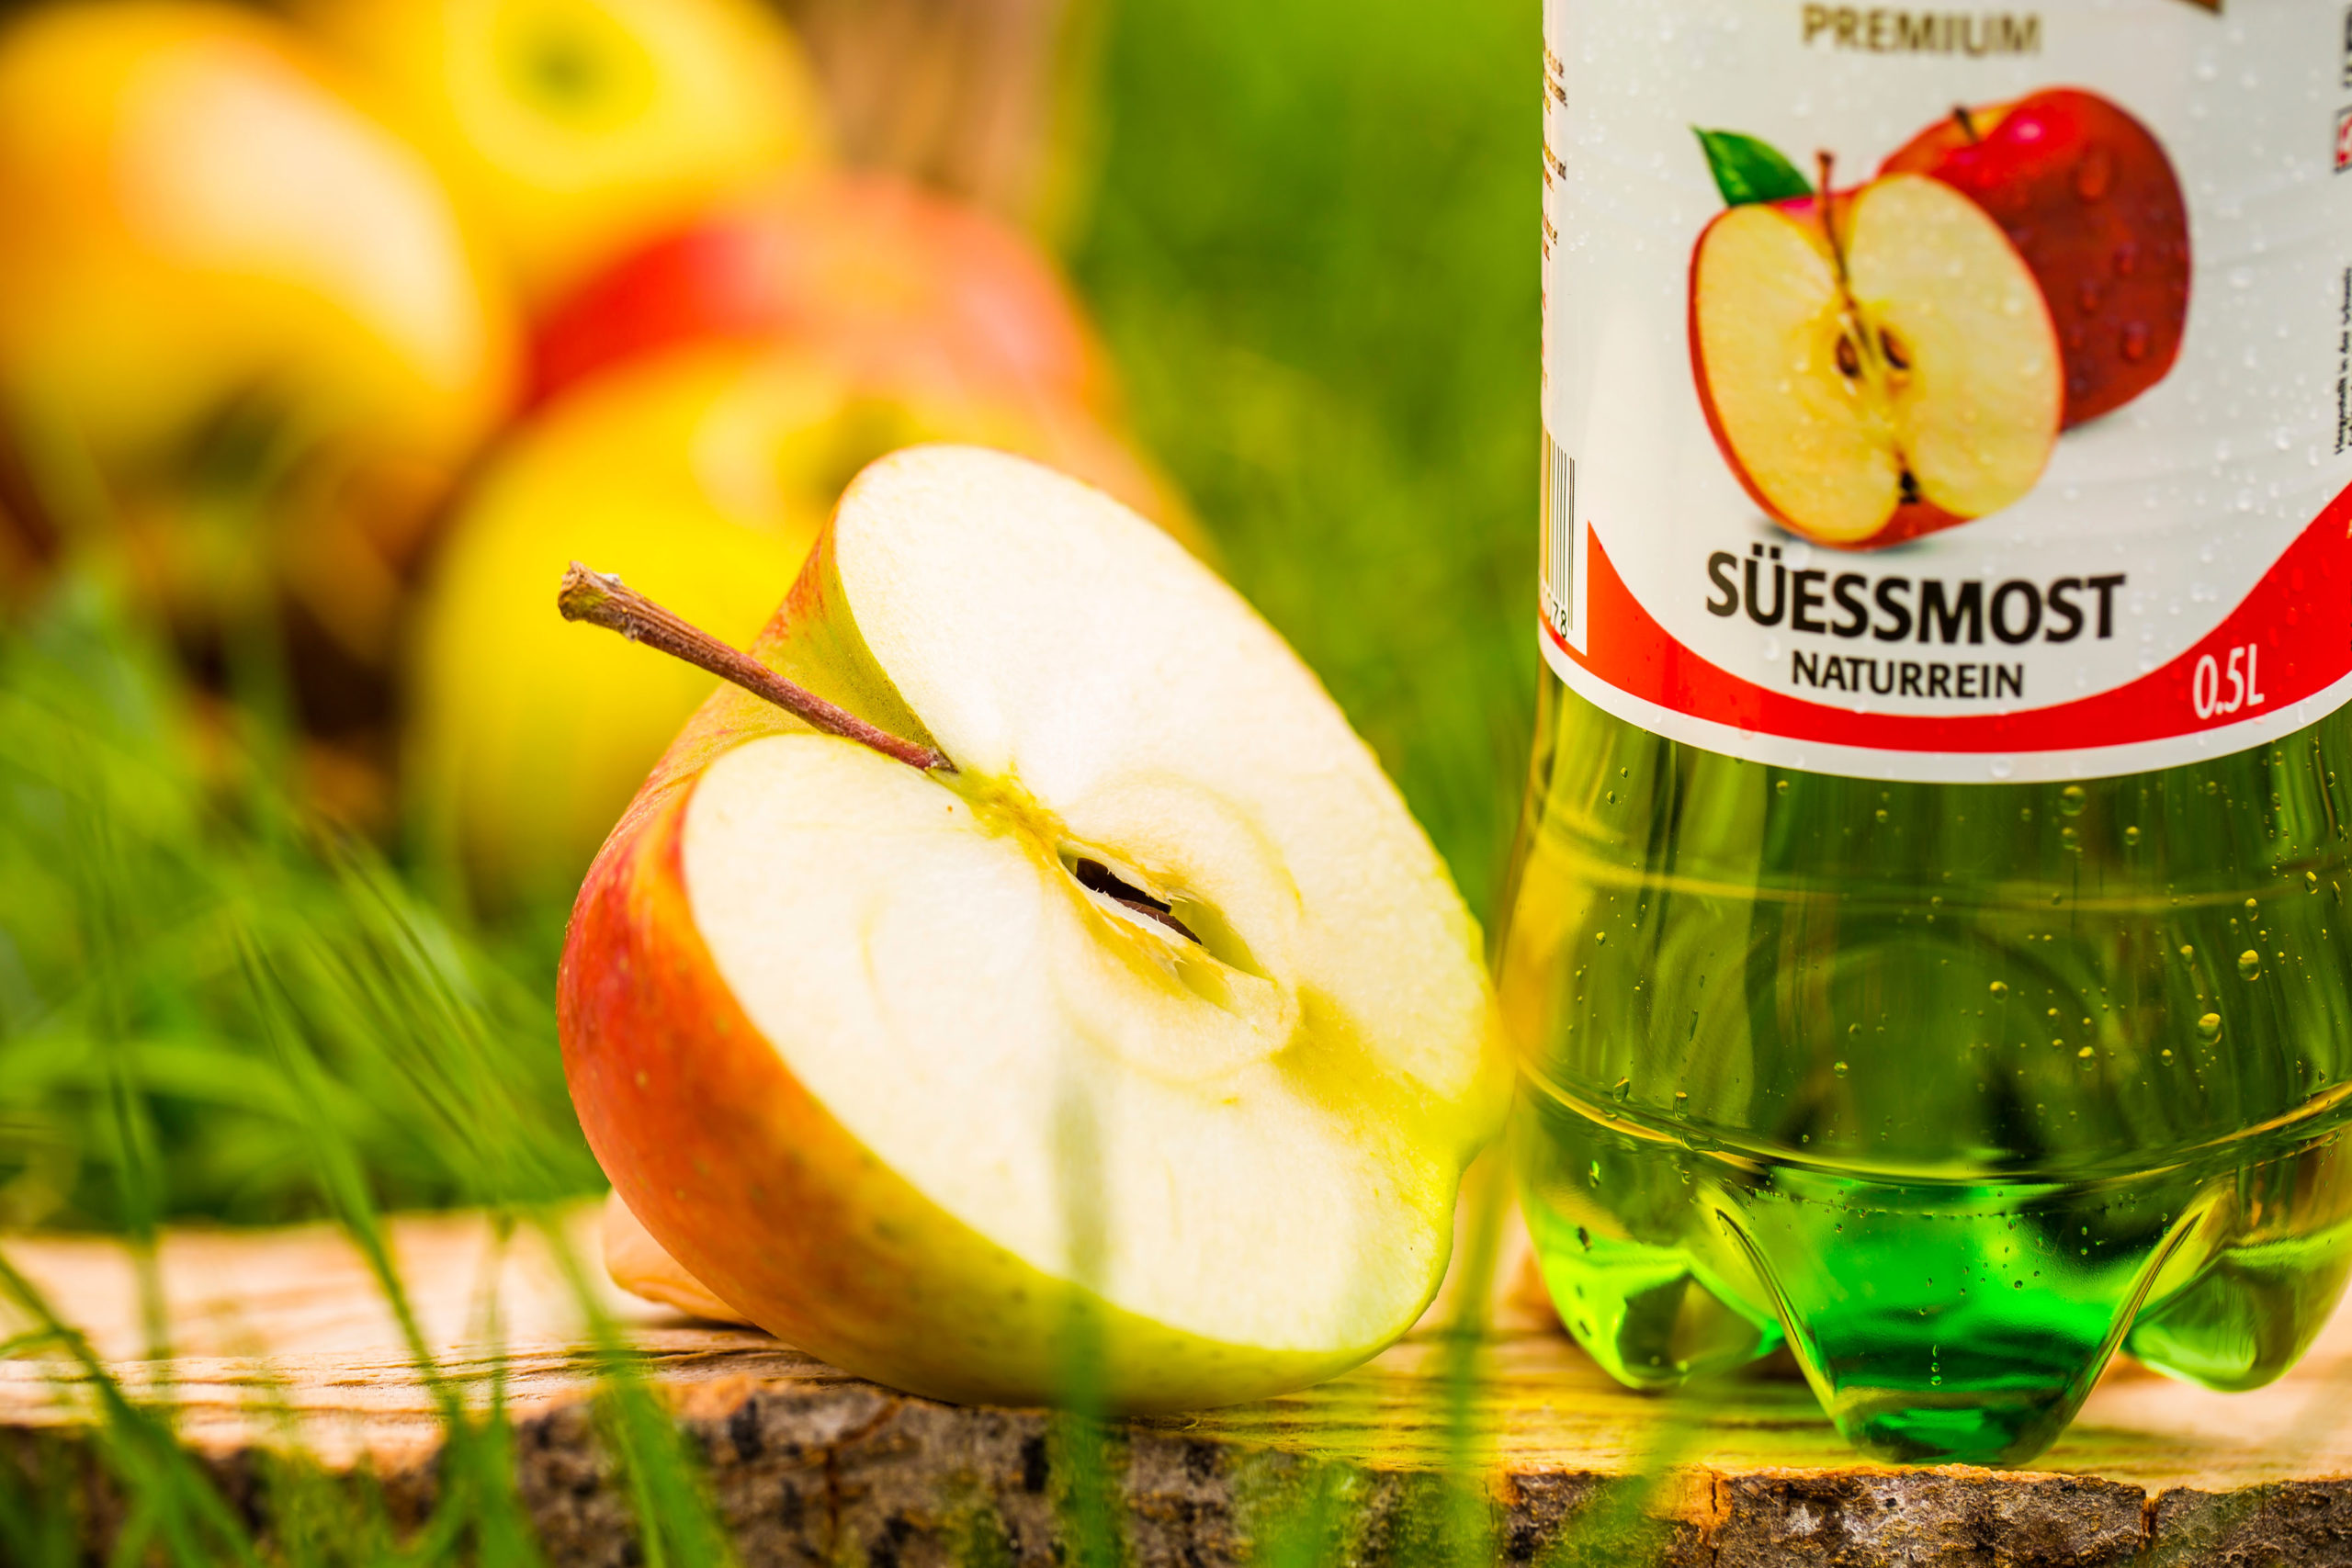 Ramseier – The most popular apple juice in Switzerland